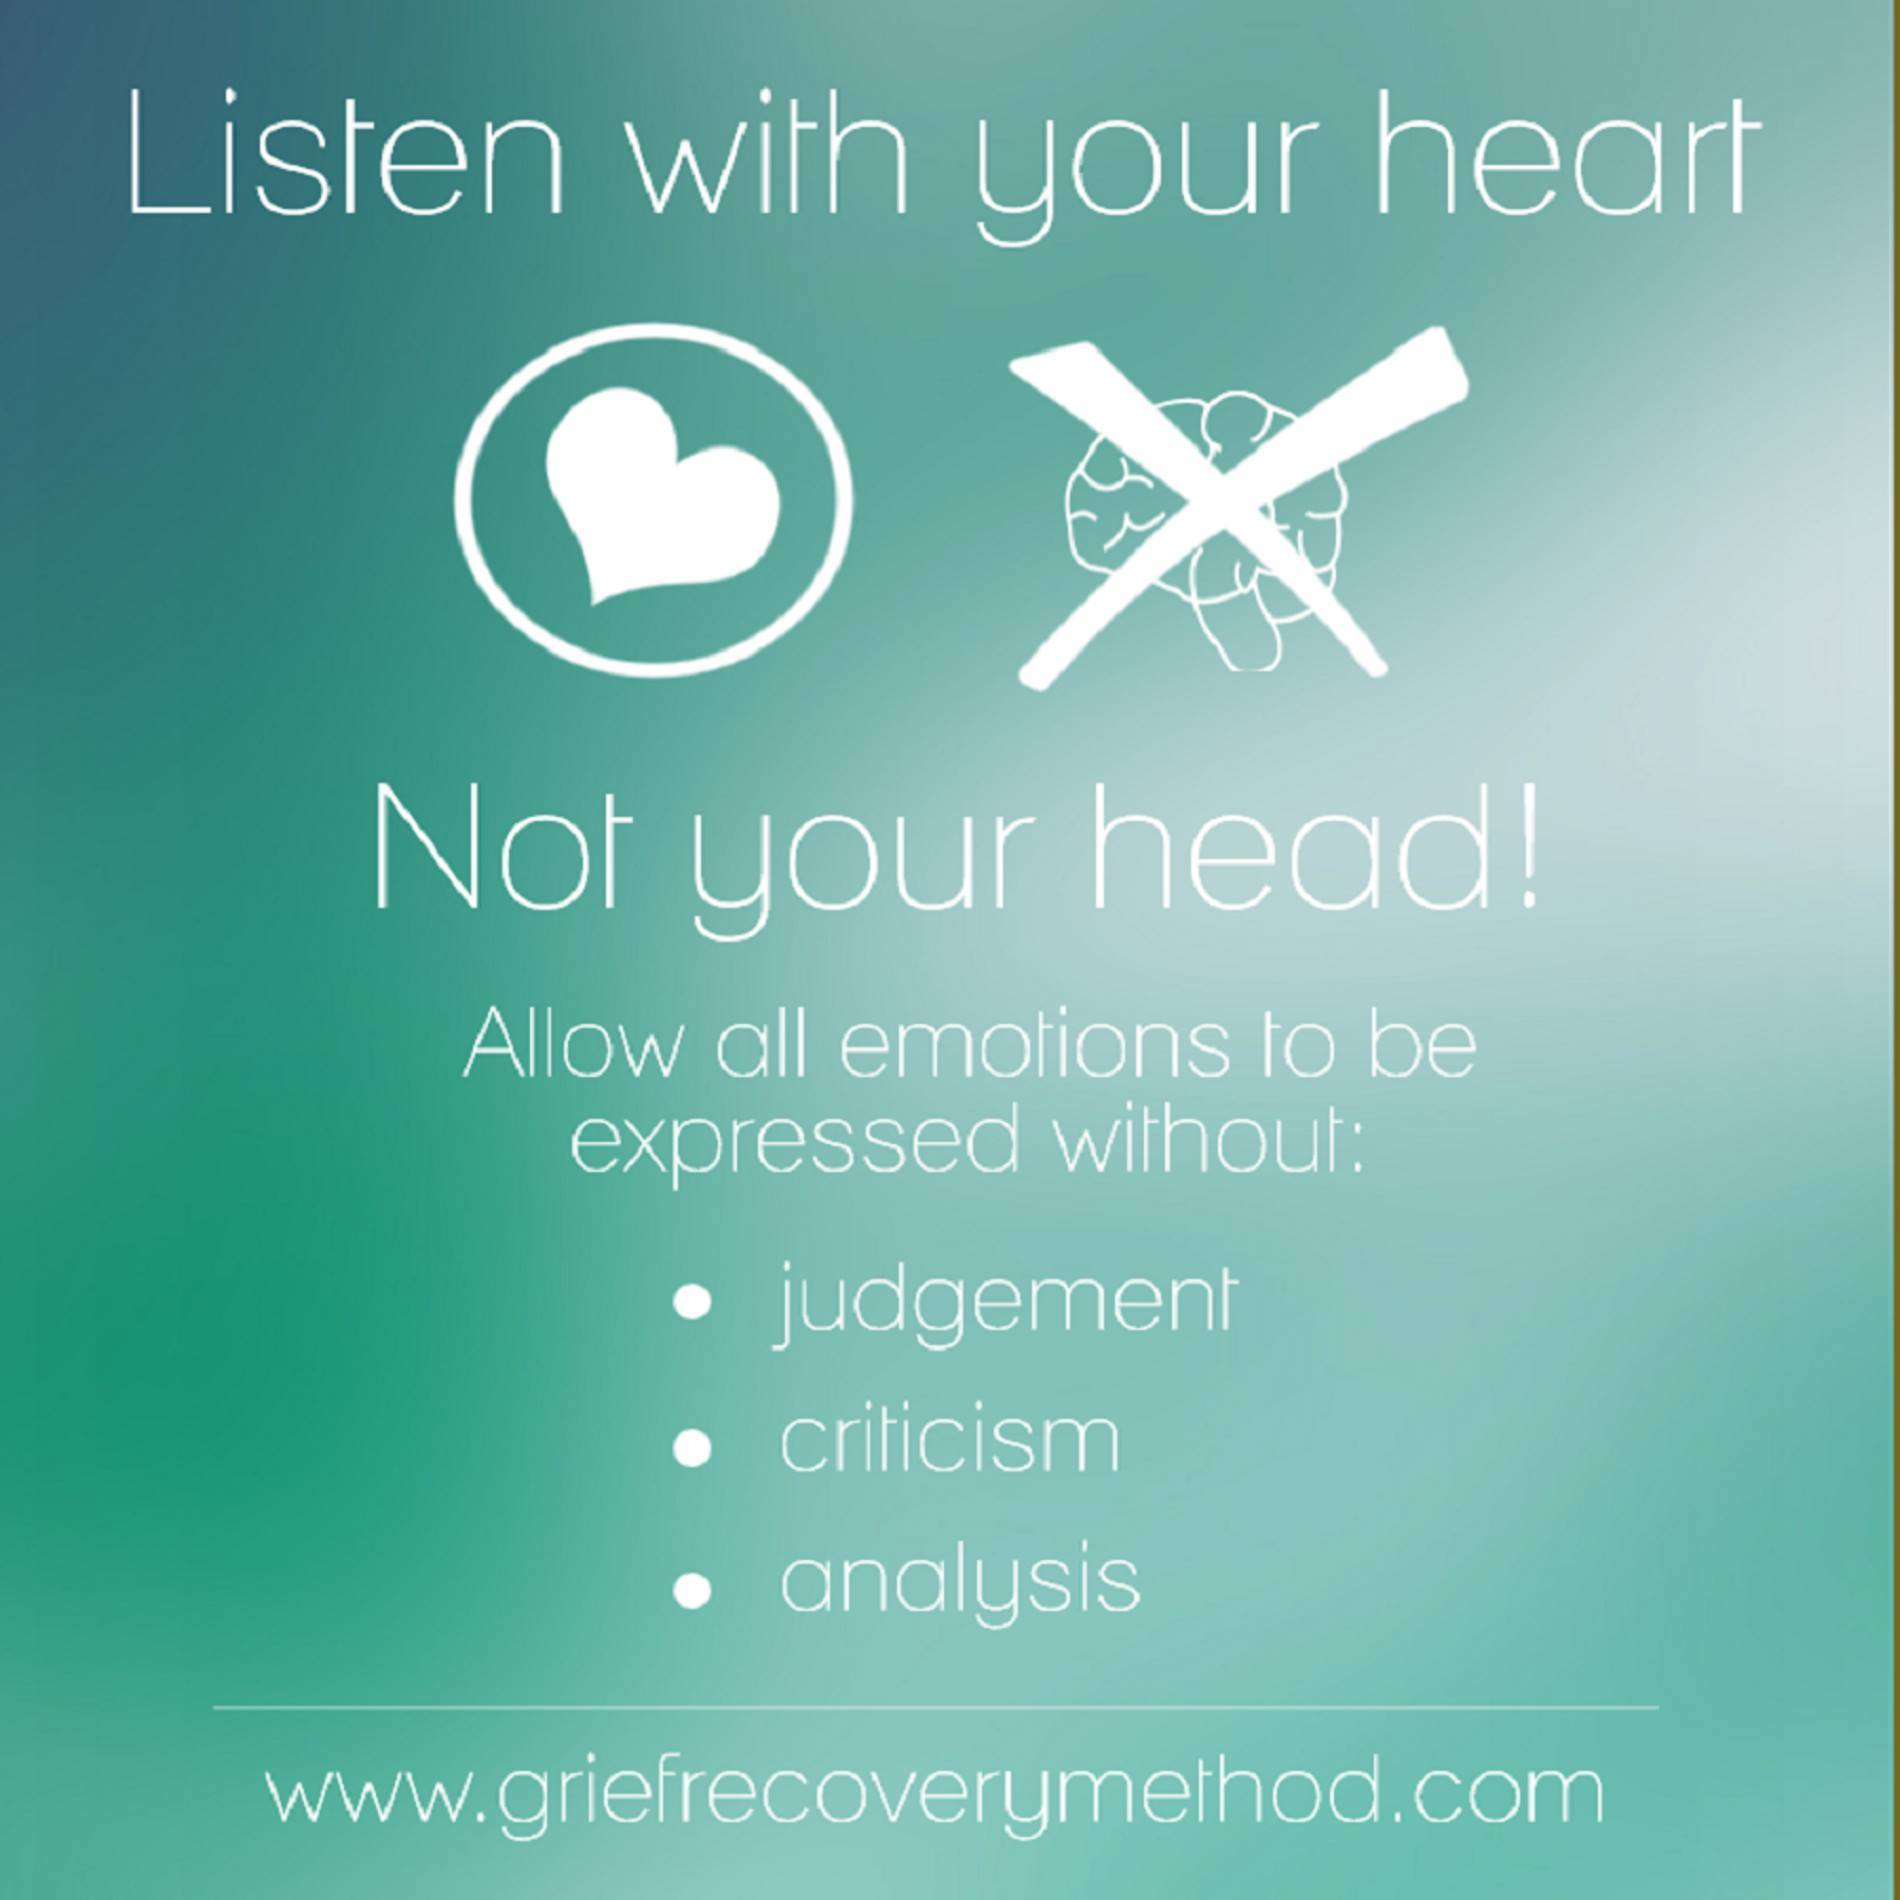 listen with your heart not head.jpg